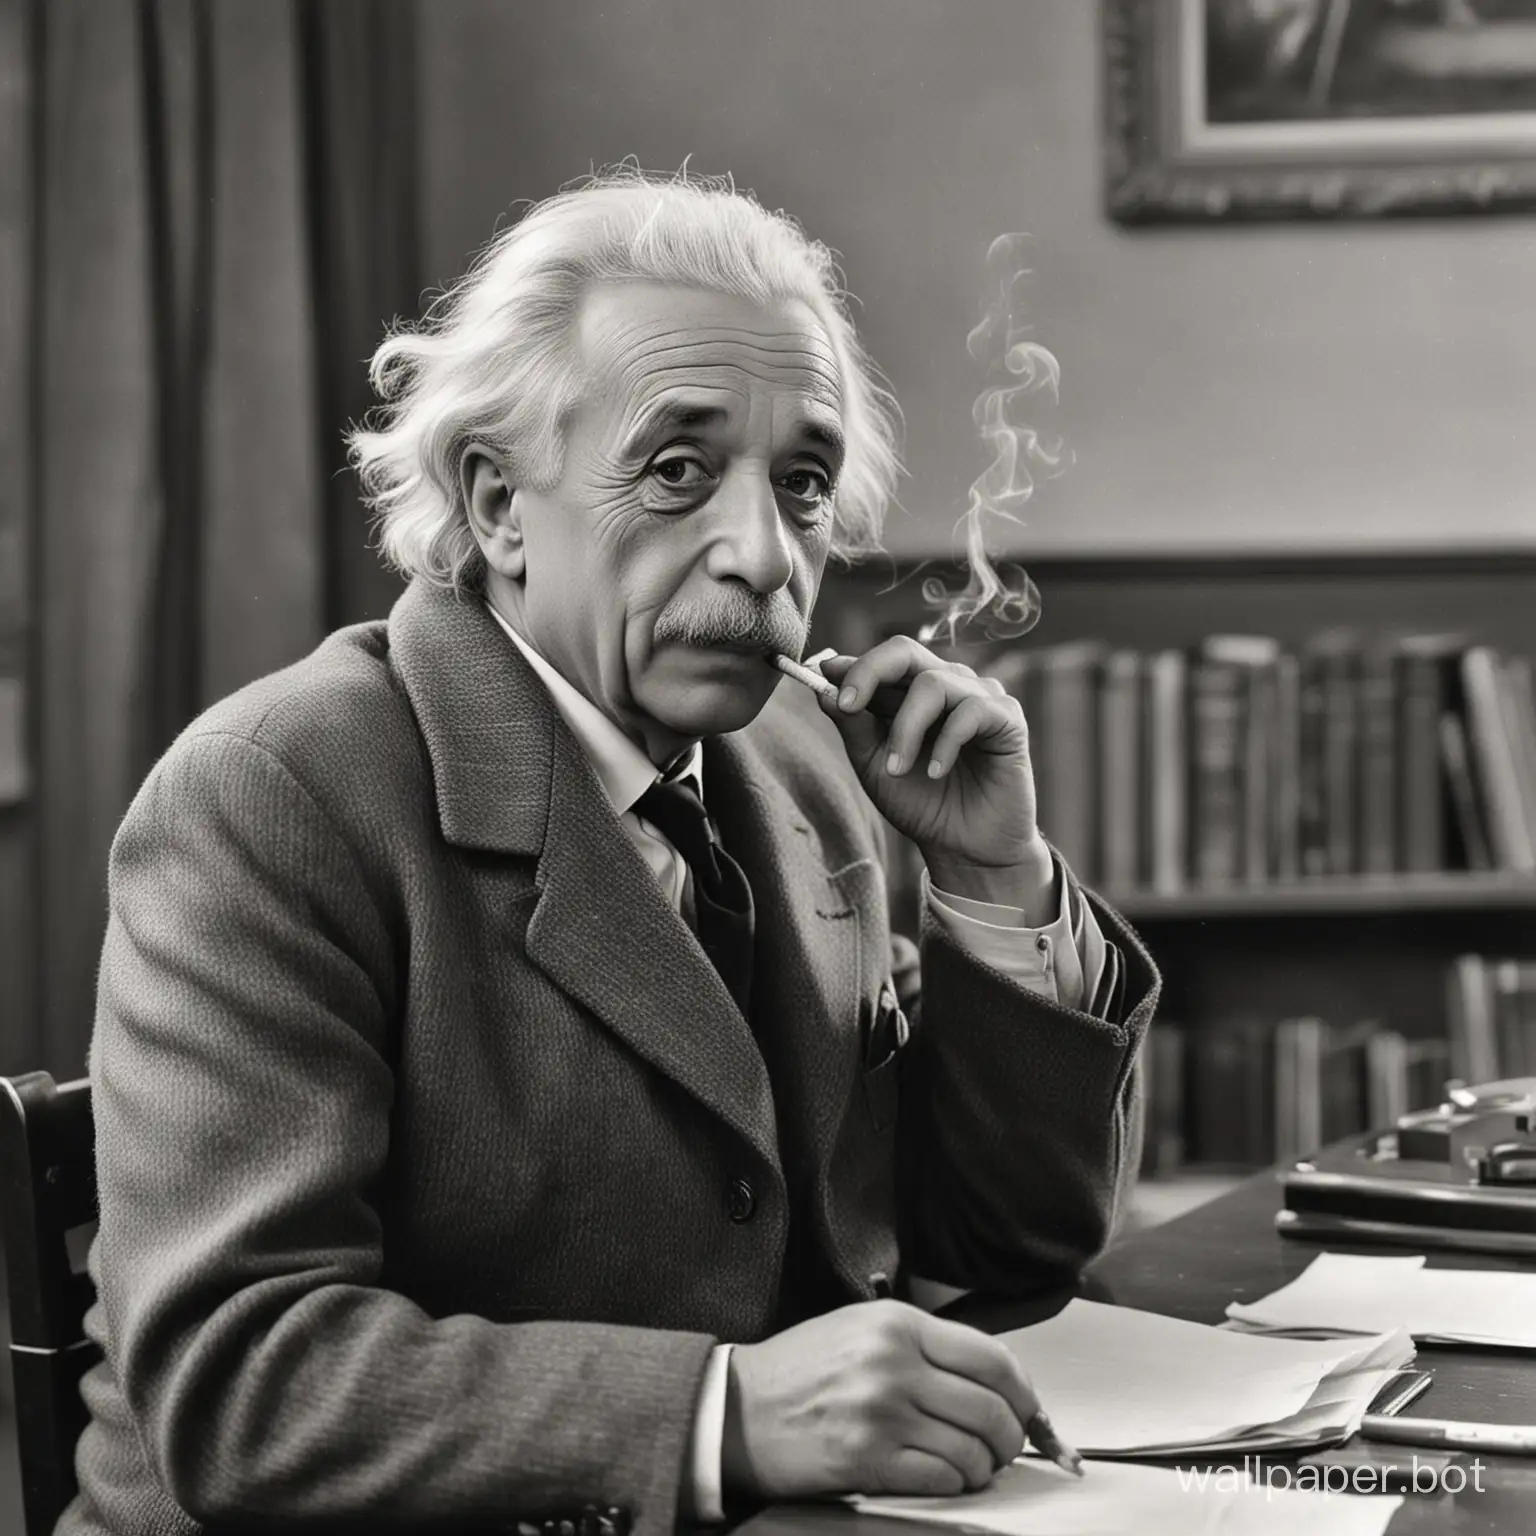 Albert-Einstein-Smoking-a-Joint-in-Vintage-Office-Setting